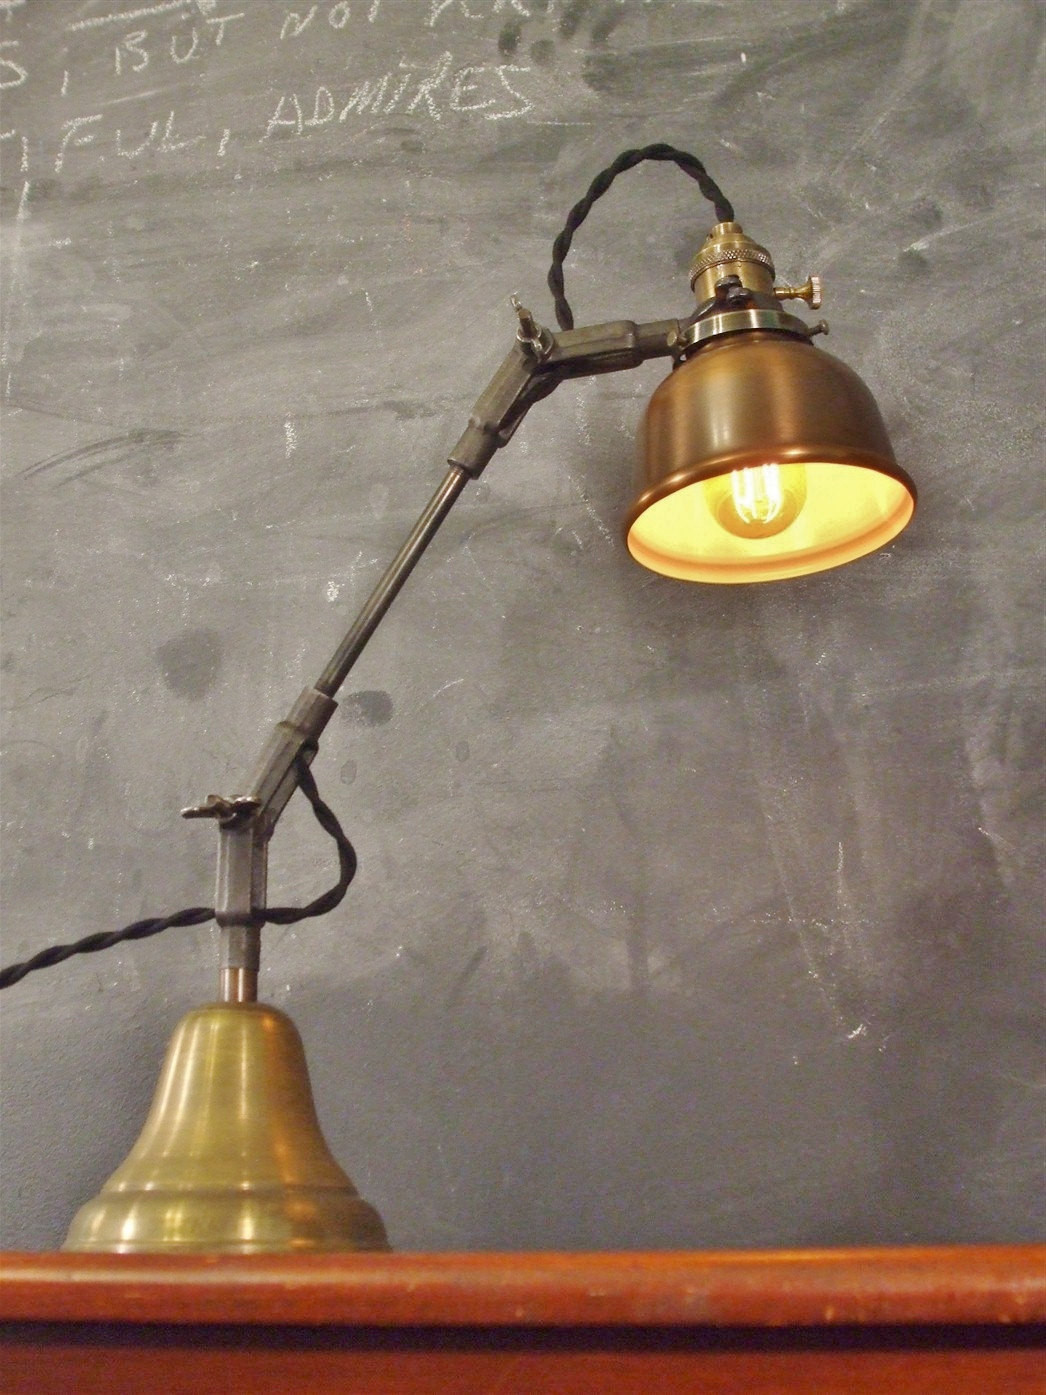 Best ideas about Antique Desk Lamp
. Save or Pin Vintage Industrial Desk Lamp Machine Age Task Light Cast Now.